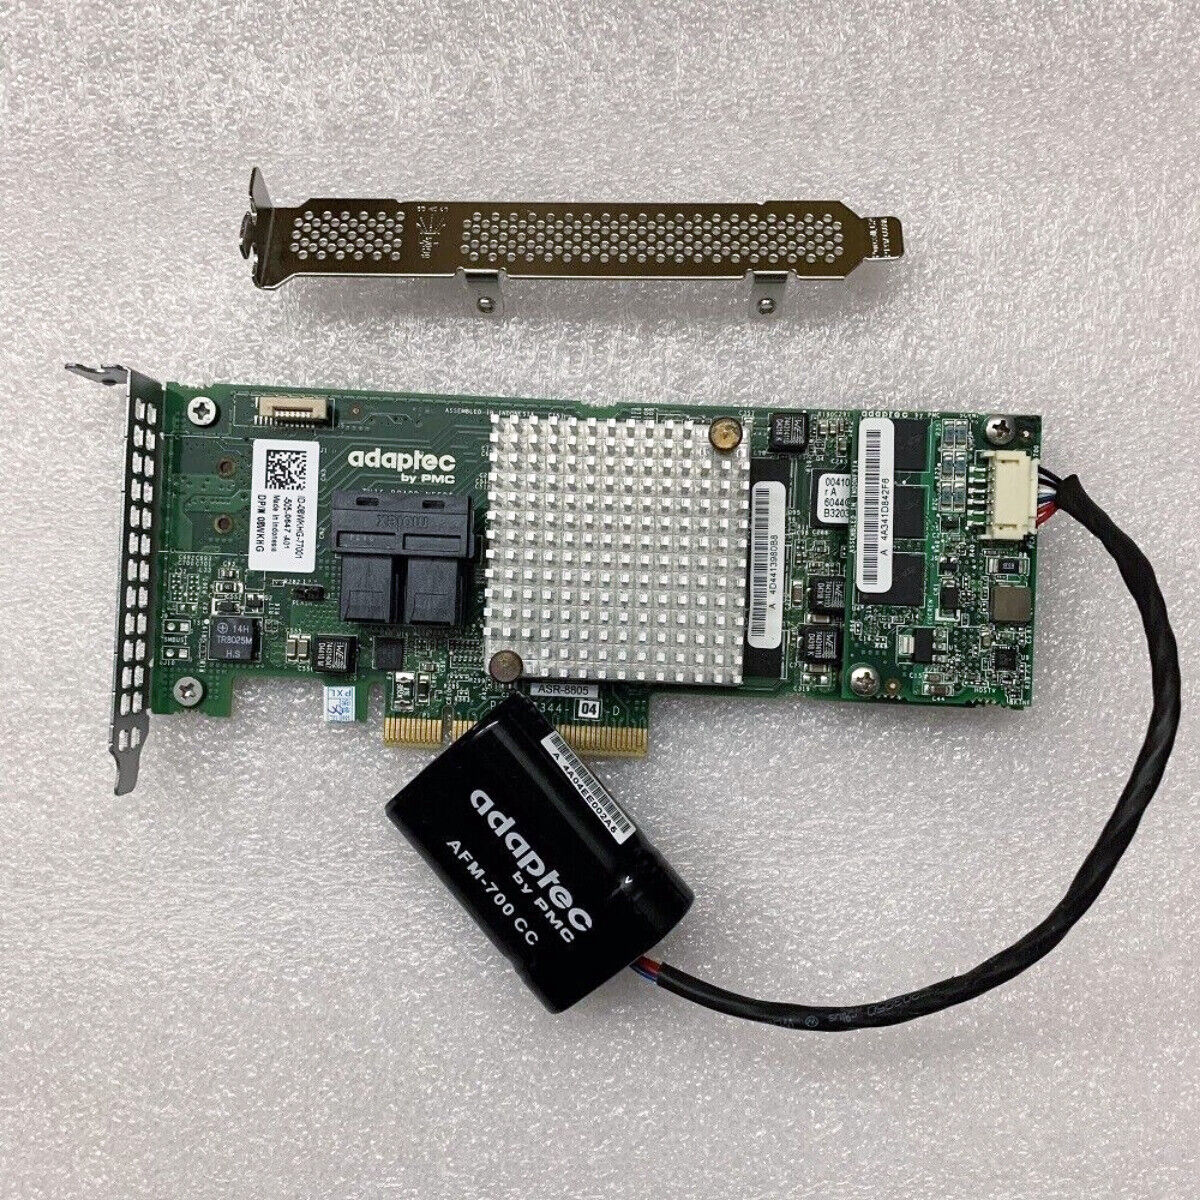 New ASR-8805 Adaptec 12 Gb/s RAID Card + Flash Module AFM-700 + 2P 8643 cable